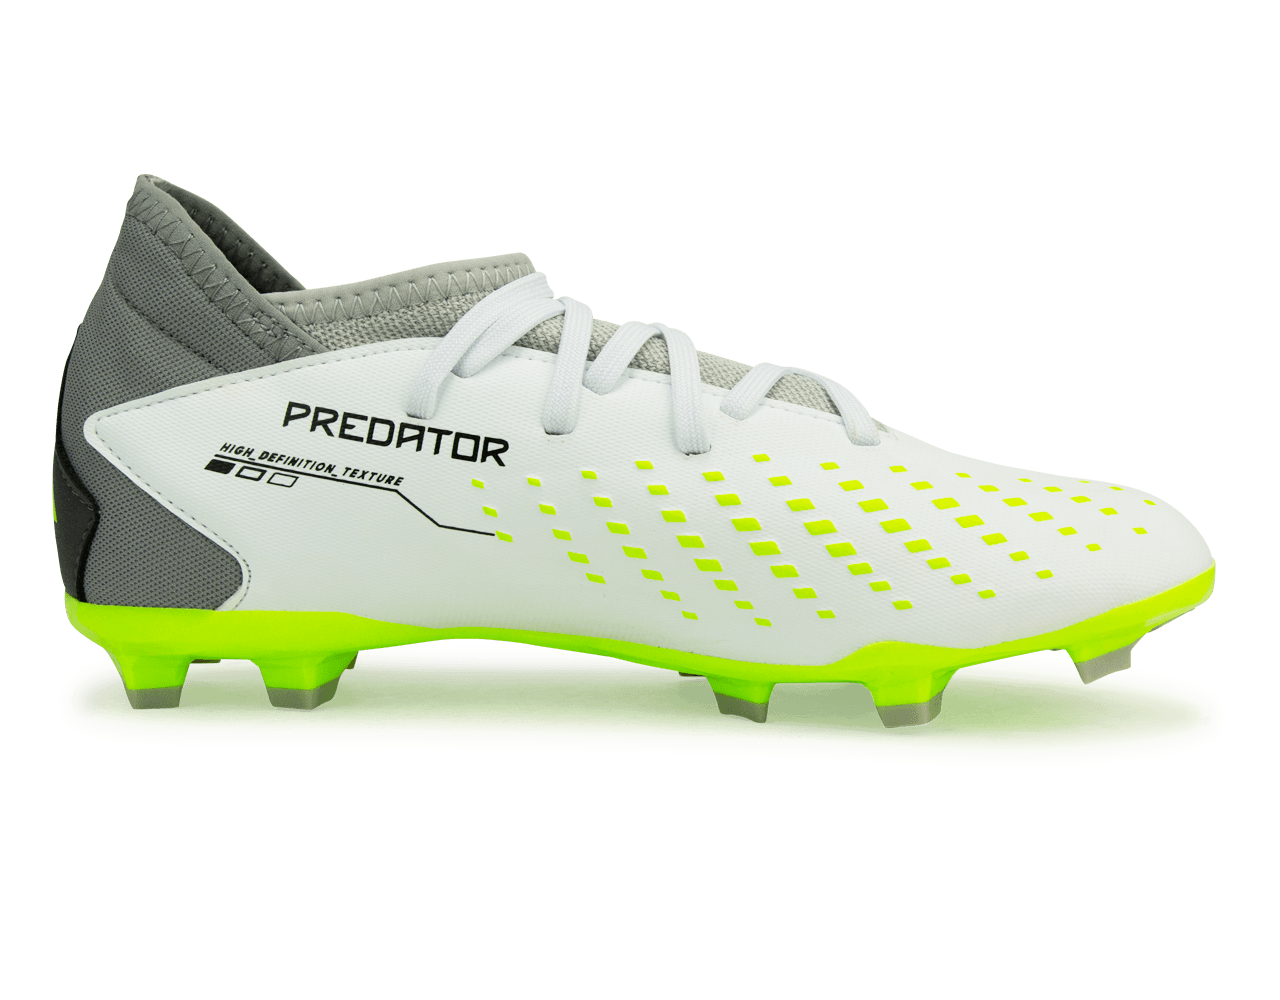 adidas Predator Football Boots for Adults & Kids